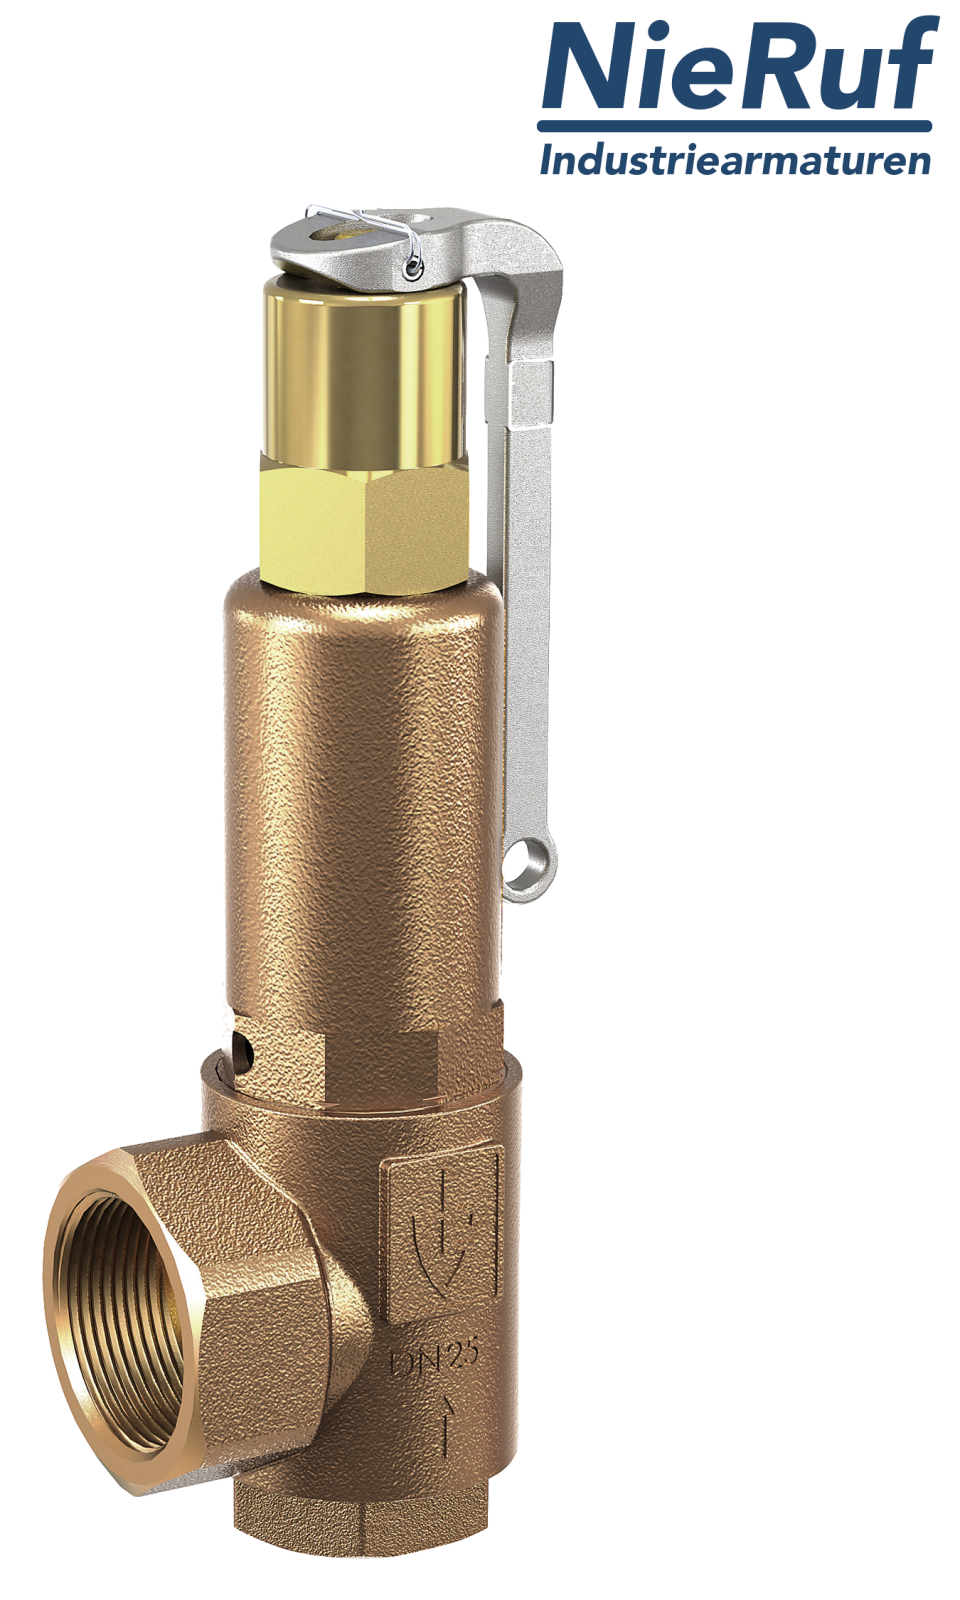 safety valve 1 1/2" x 2" fm SV07 neutral gaseous media, gunmetal EPDM, with lever